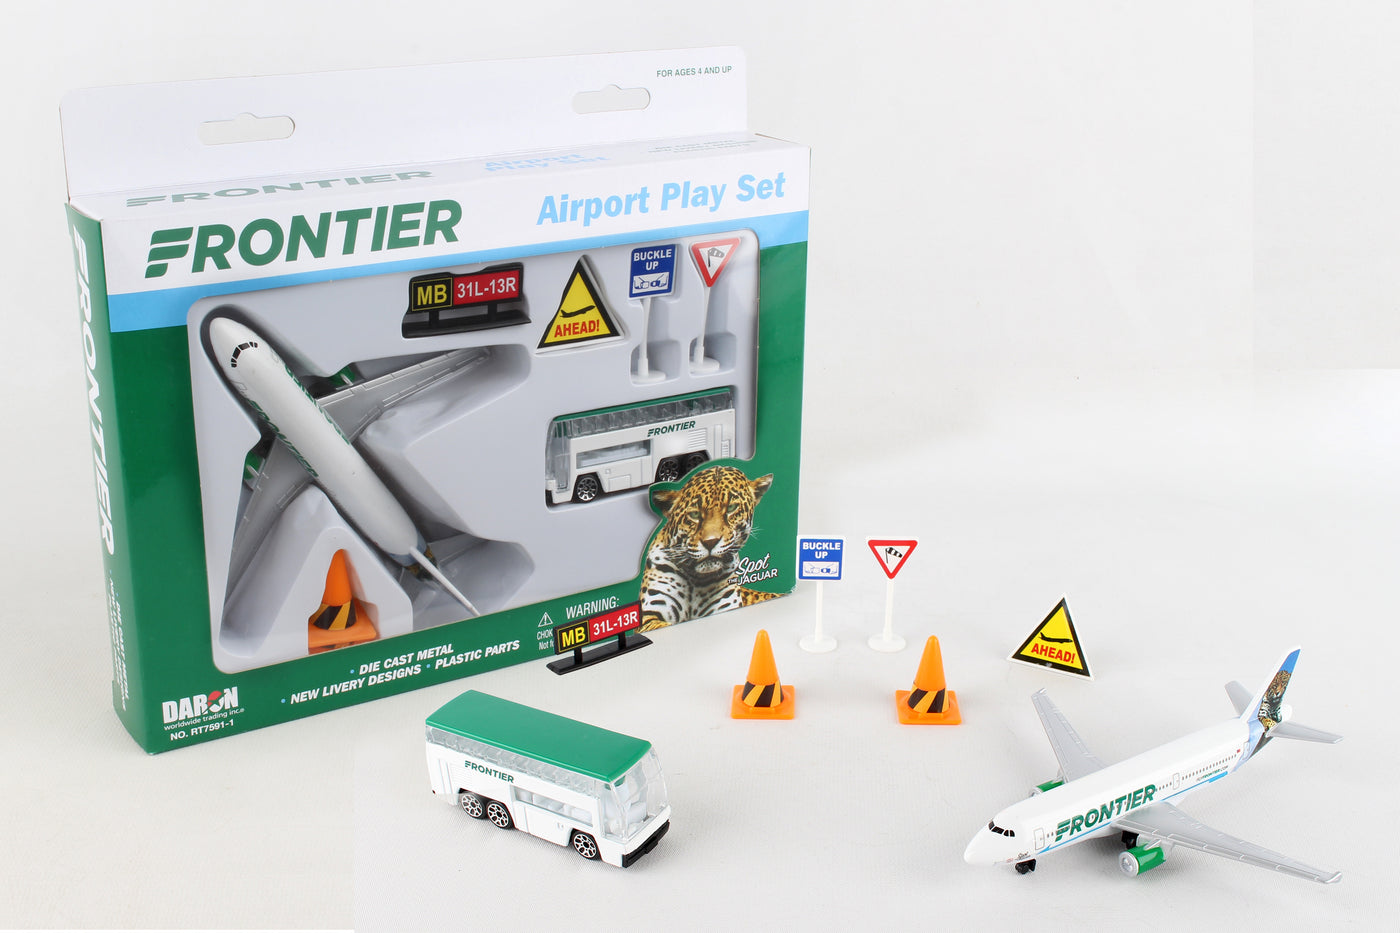  Daron Westjet Airport Playset : Toys & Games